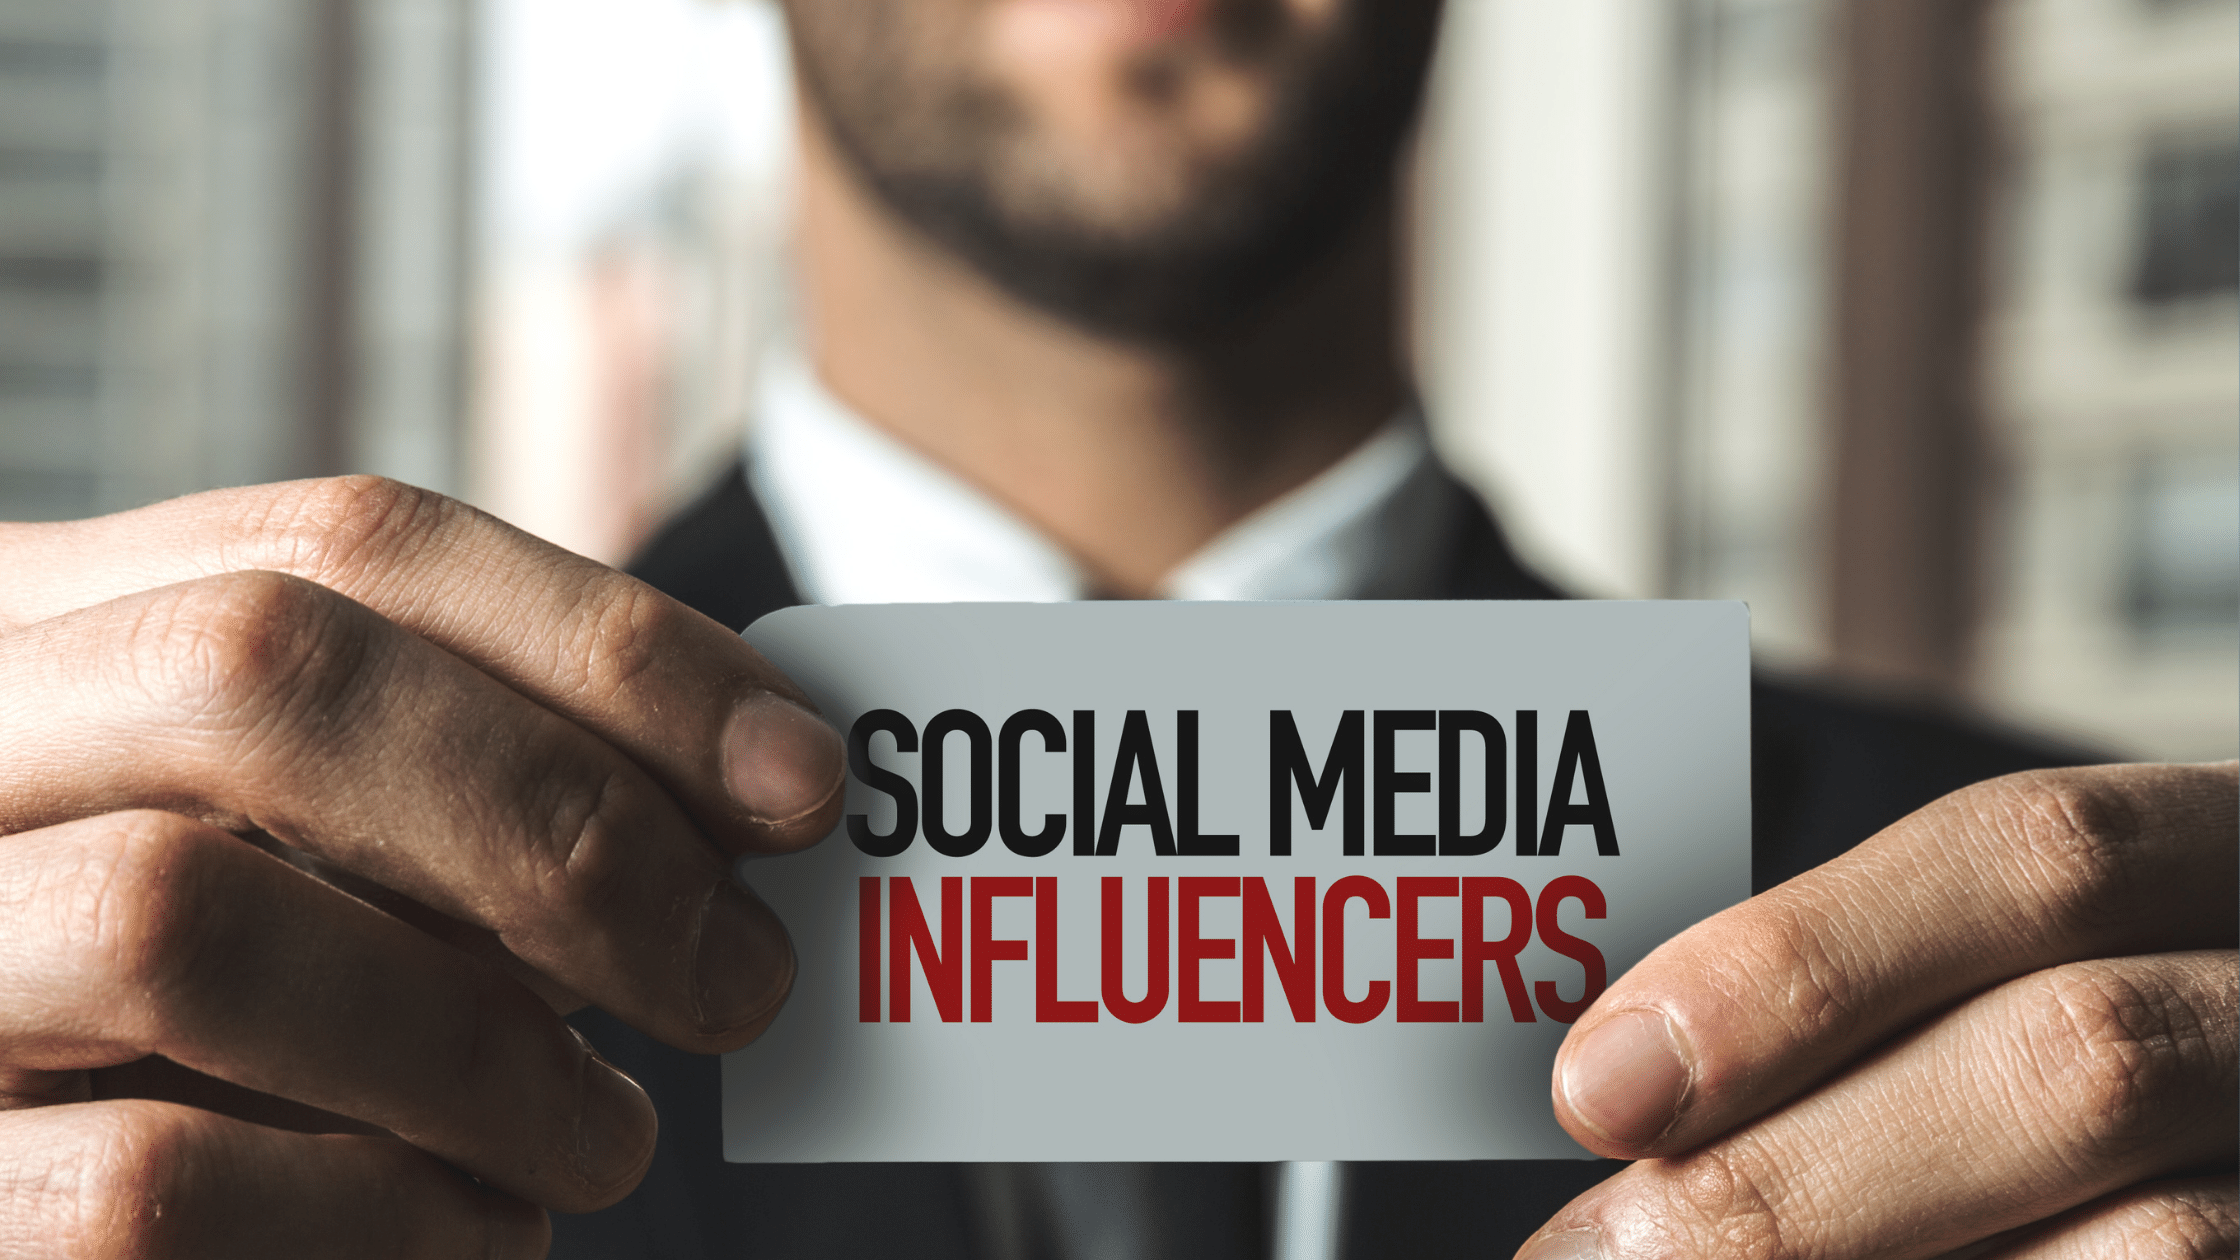 Social Media Influencers